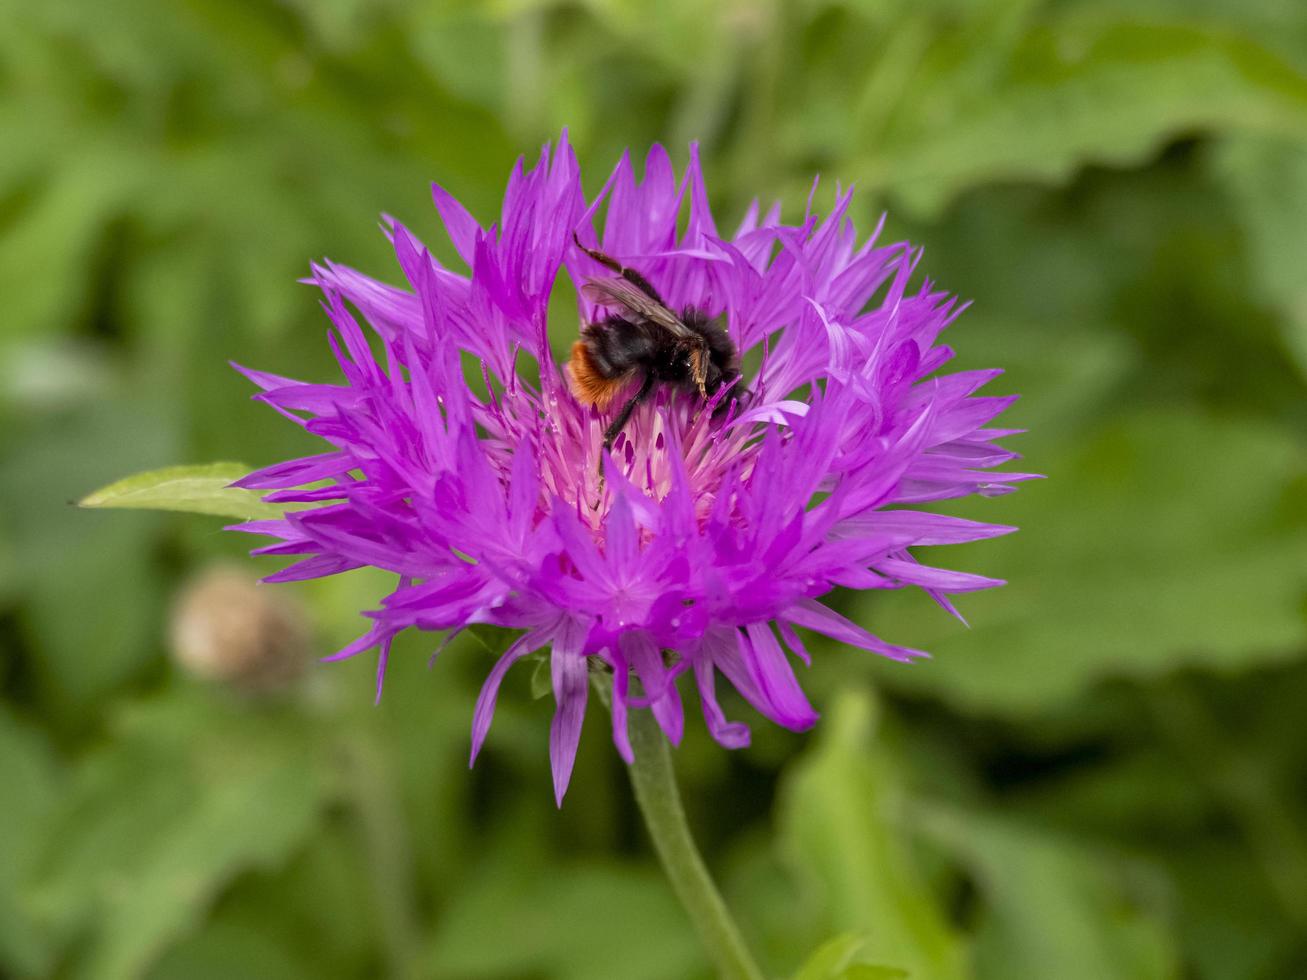 Purple cornflower with a visiting bee pollinator photo